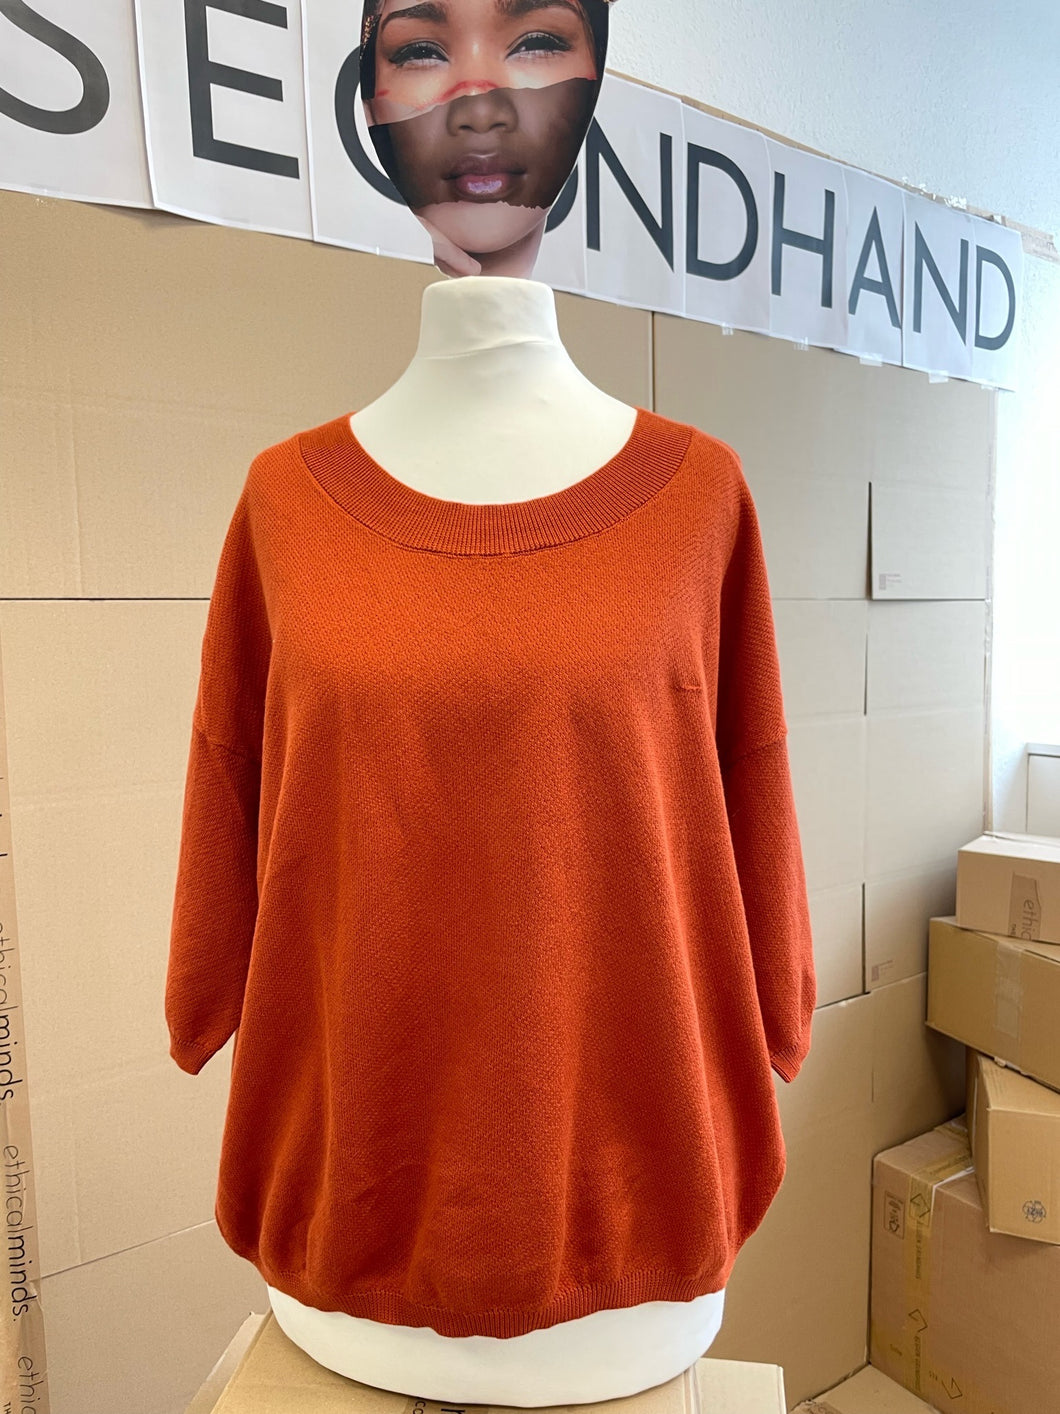 secondhand.pullover-orange-vorne